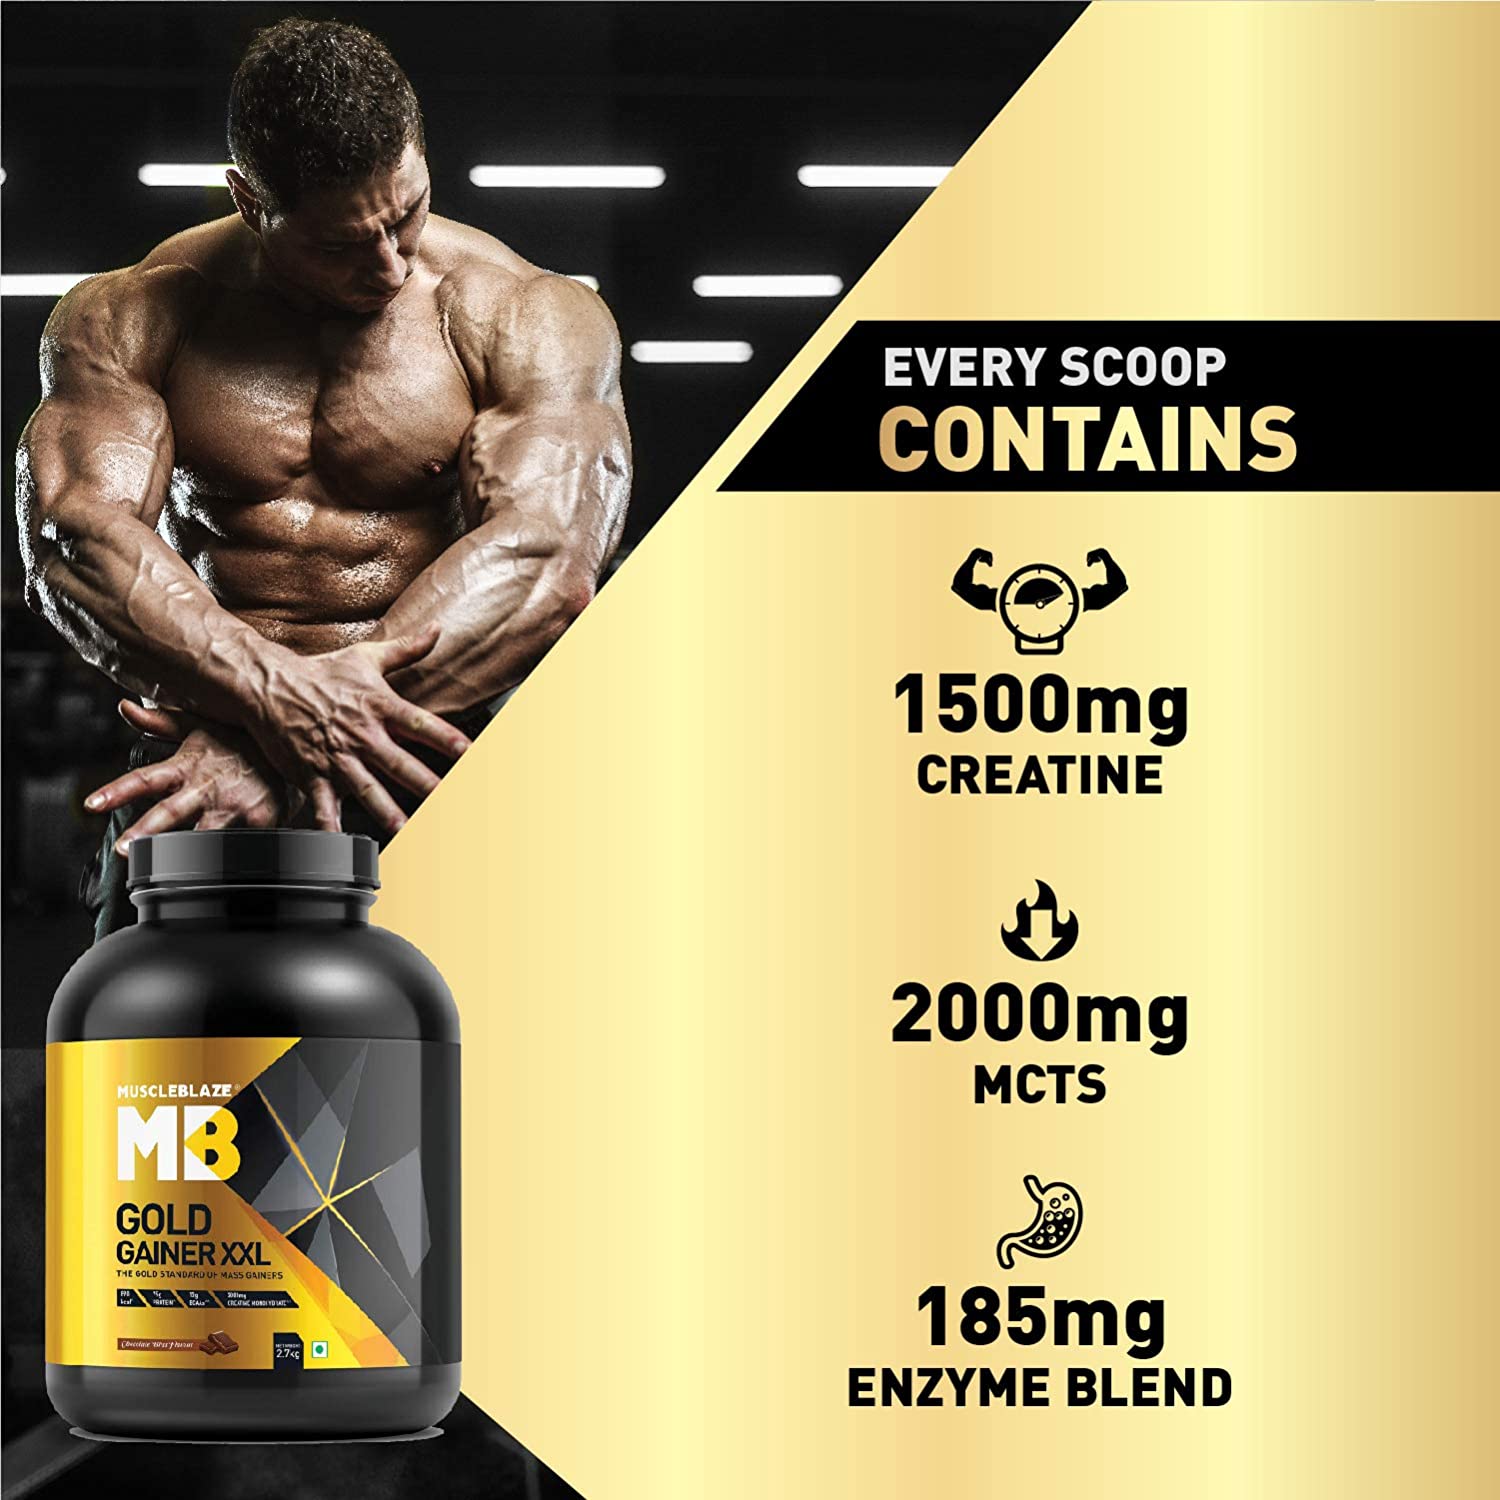 Image Of Muscleblaze Gold Gainer Xxl Mass Gainer Beast Nutrition